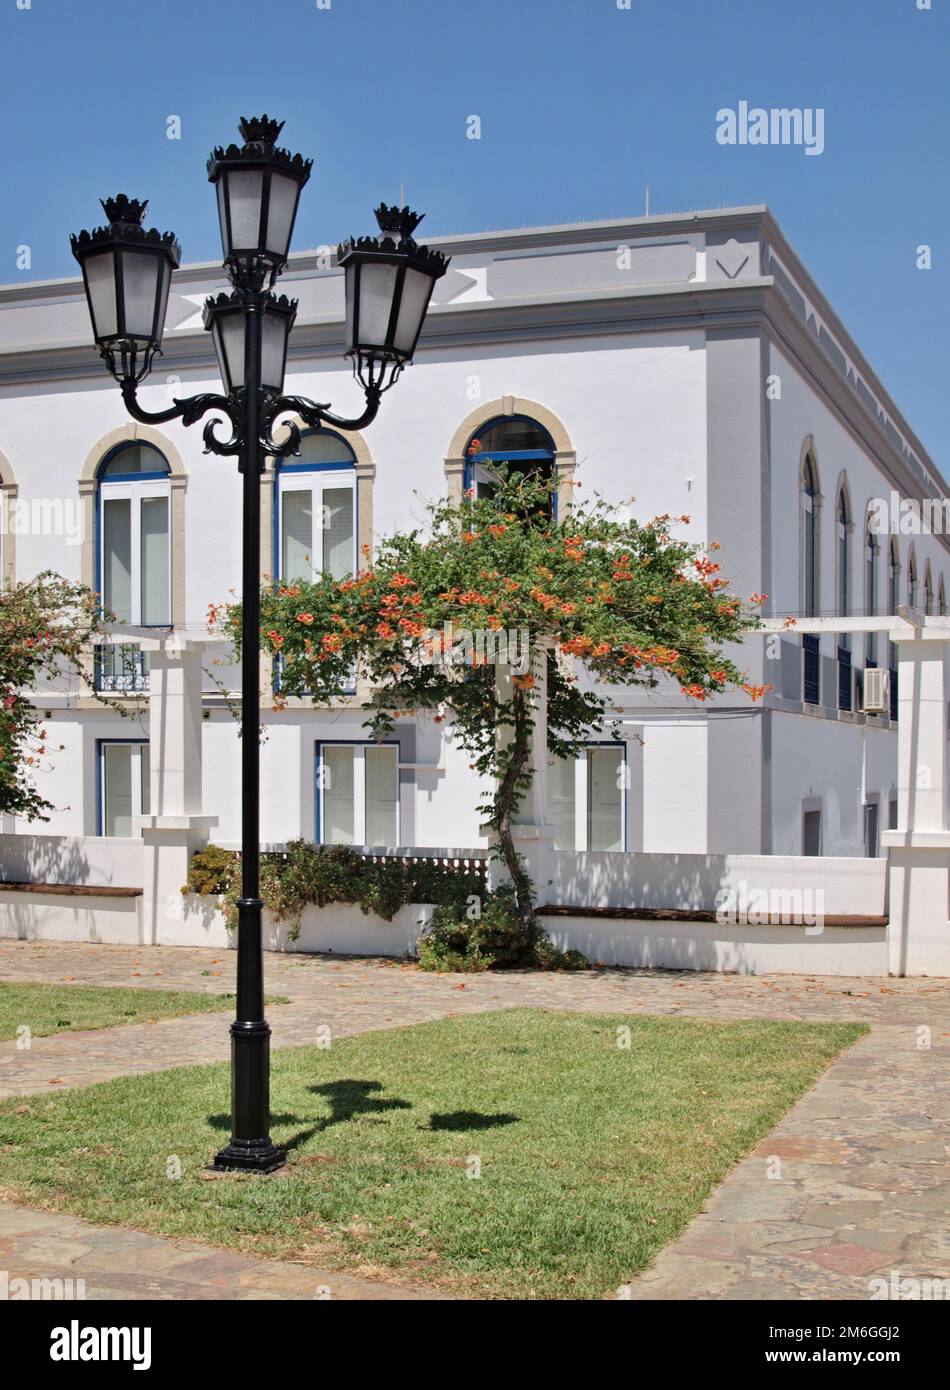 Typical administrative architecture in the Alentejo - Portugal Stock Photo